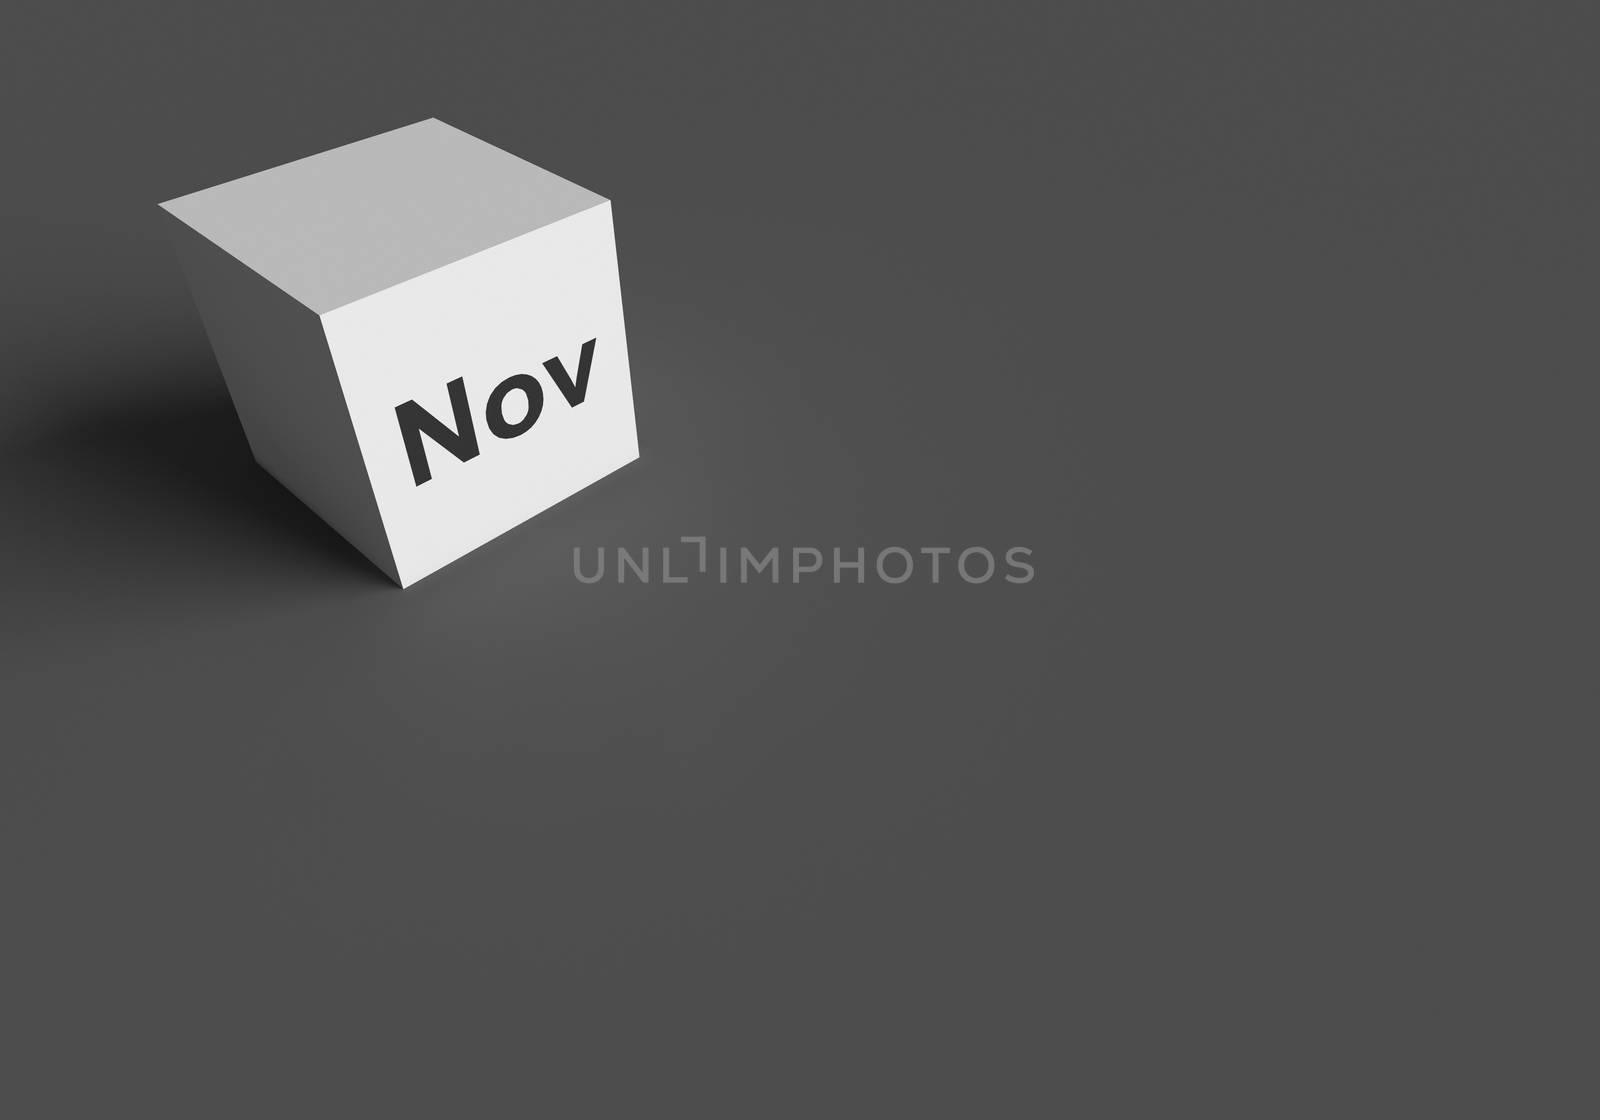 3D RENDERING OF "Nov" (ABBREVIATION OF NOVEMBER) ON WHITE CUBE, STOCK PHOTO